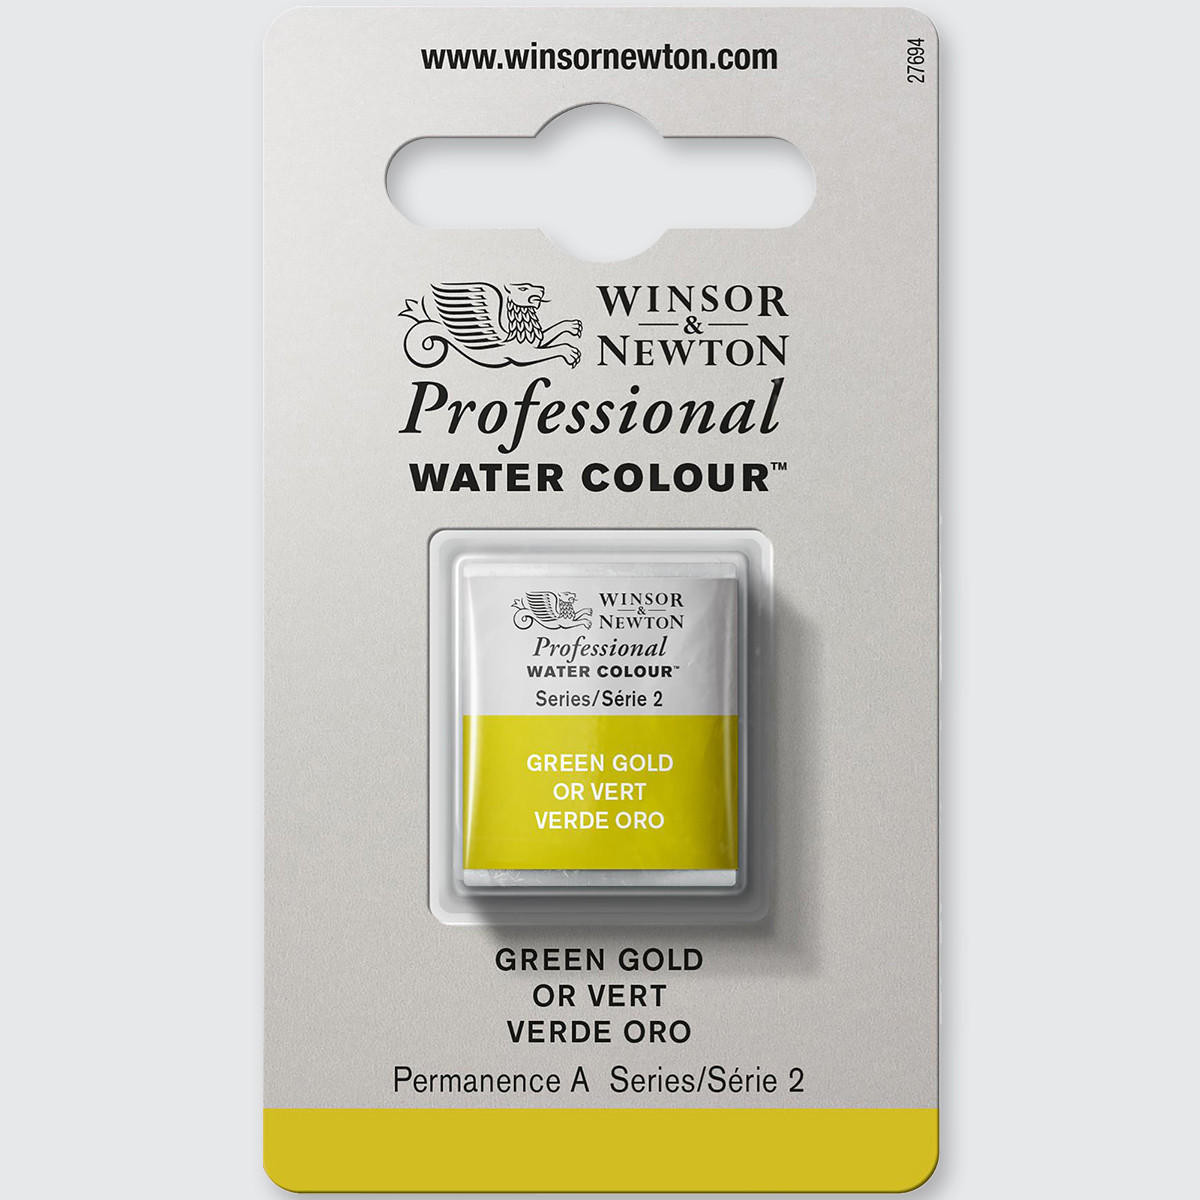 Winsor & Newton Professional Water Colour Half Pan Green Gold